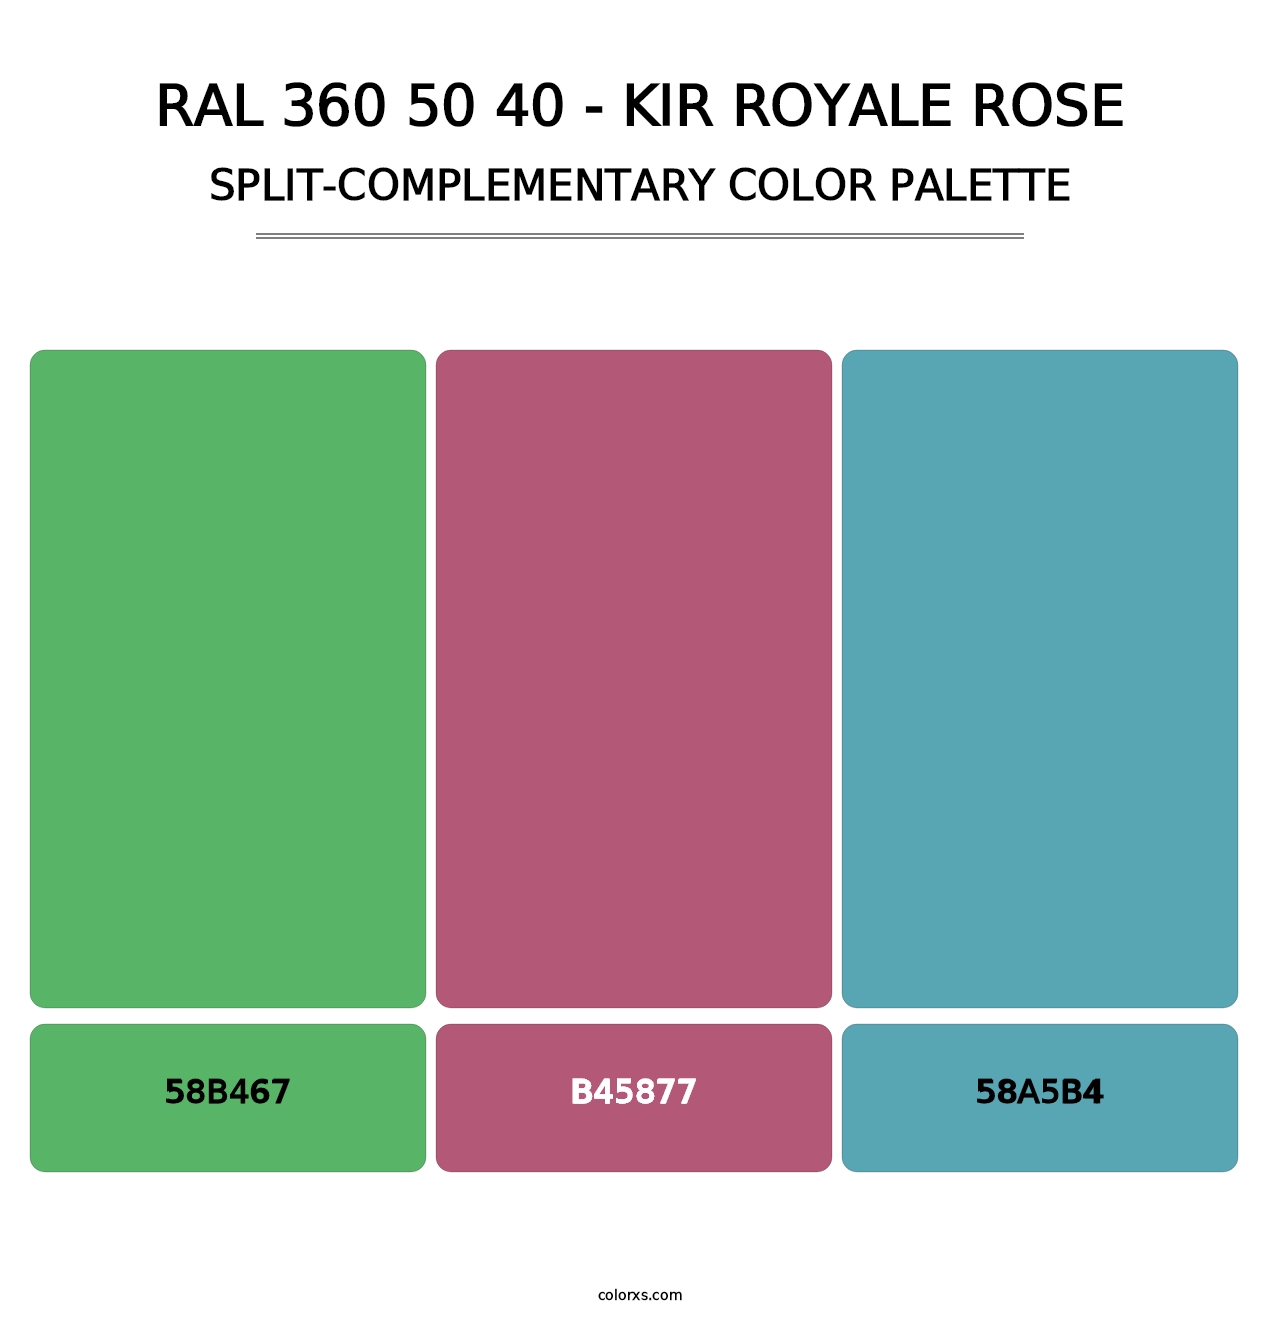 RAL 360 50 40 - Kir Royale Rose - Split-Complementary Color Palette